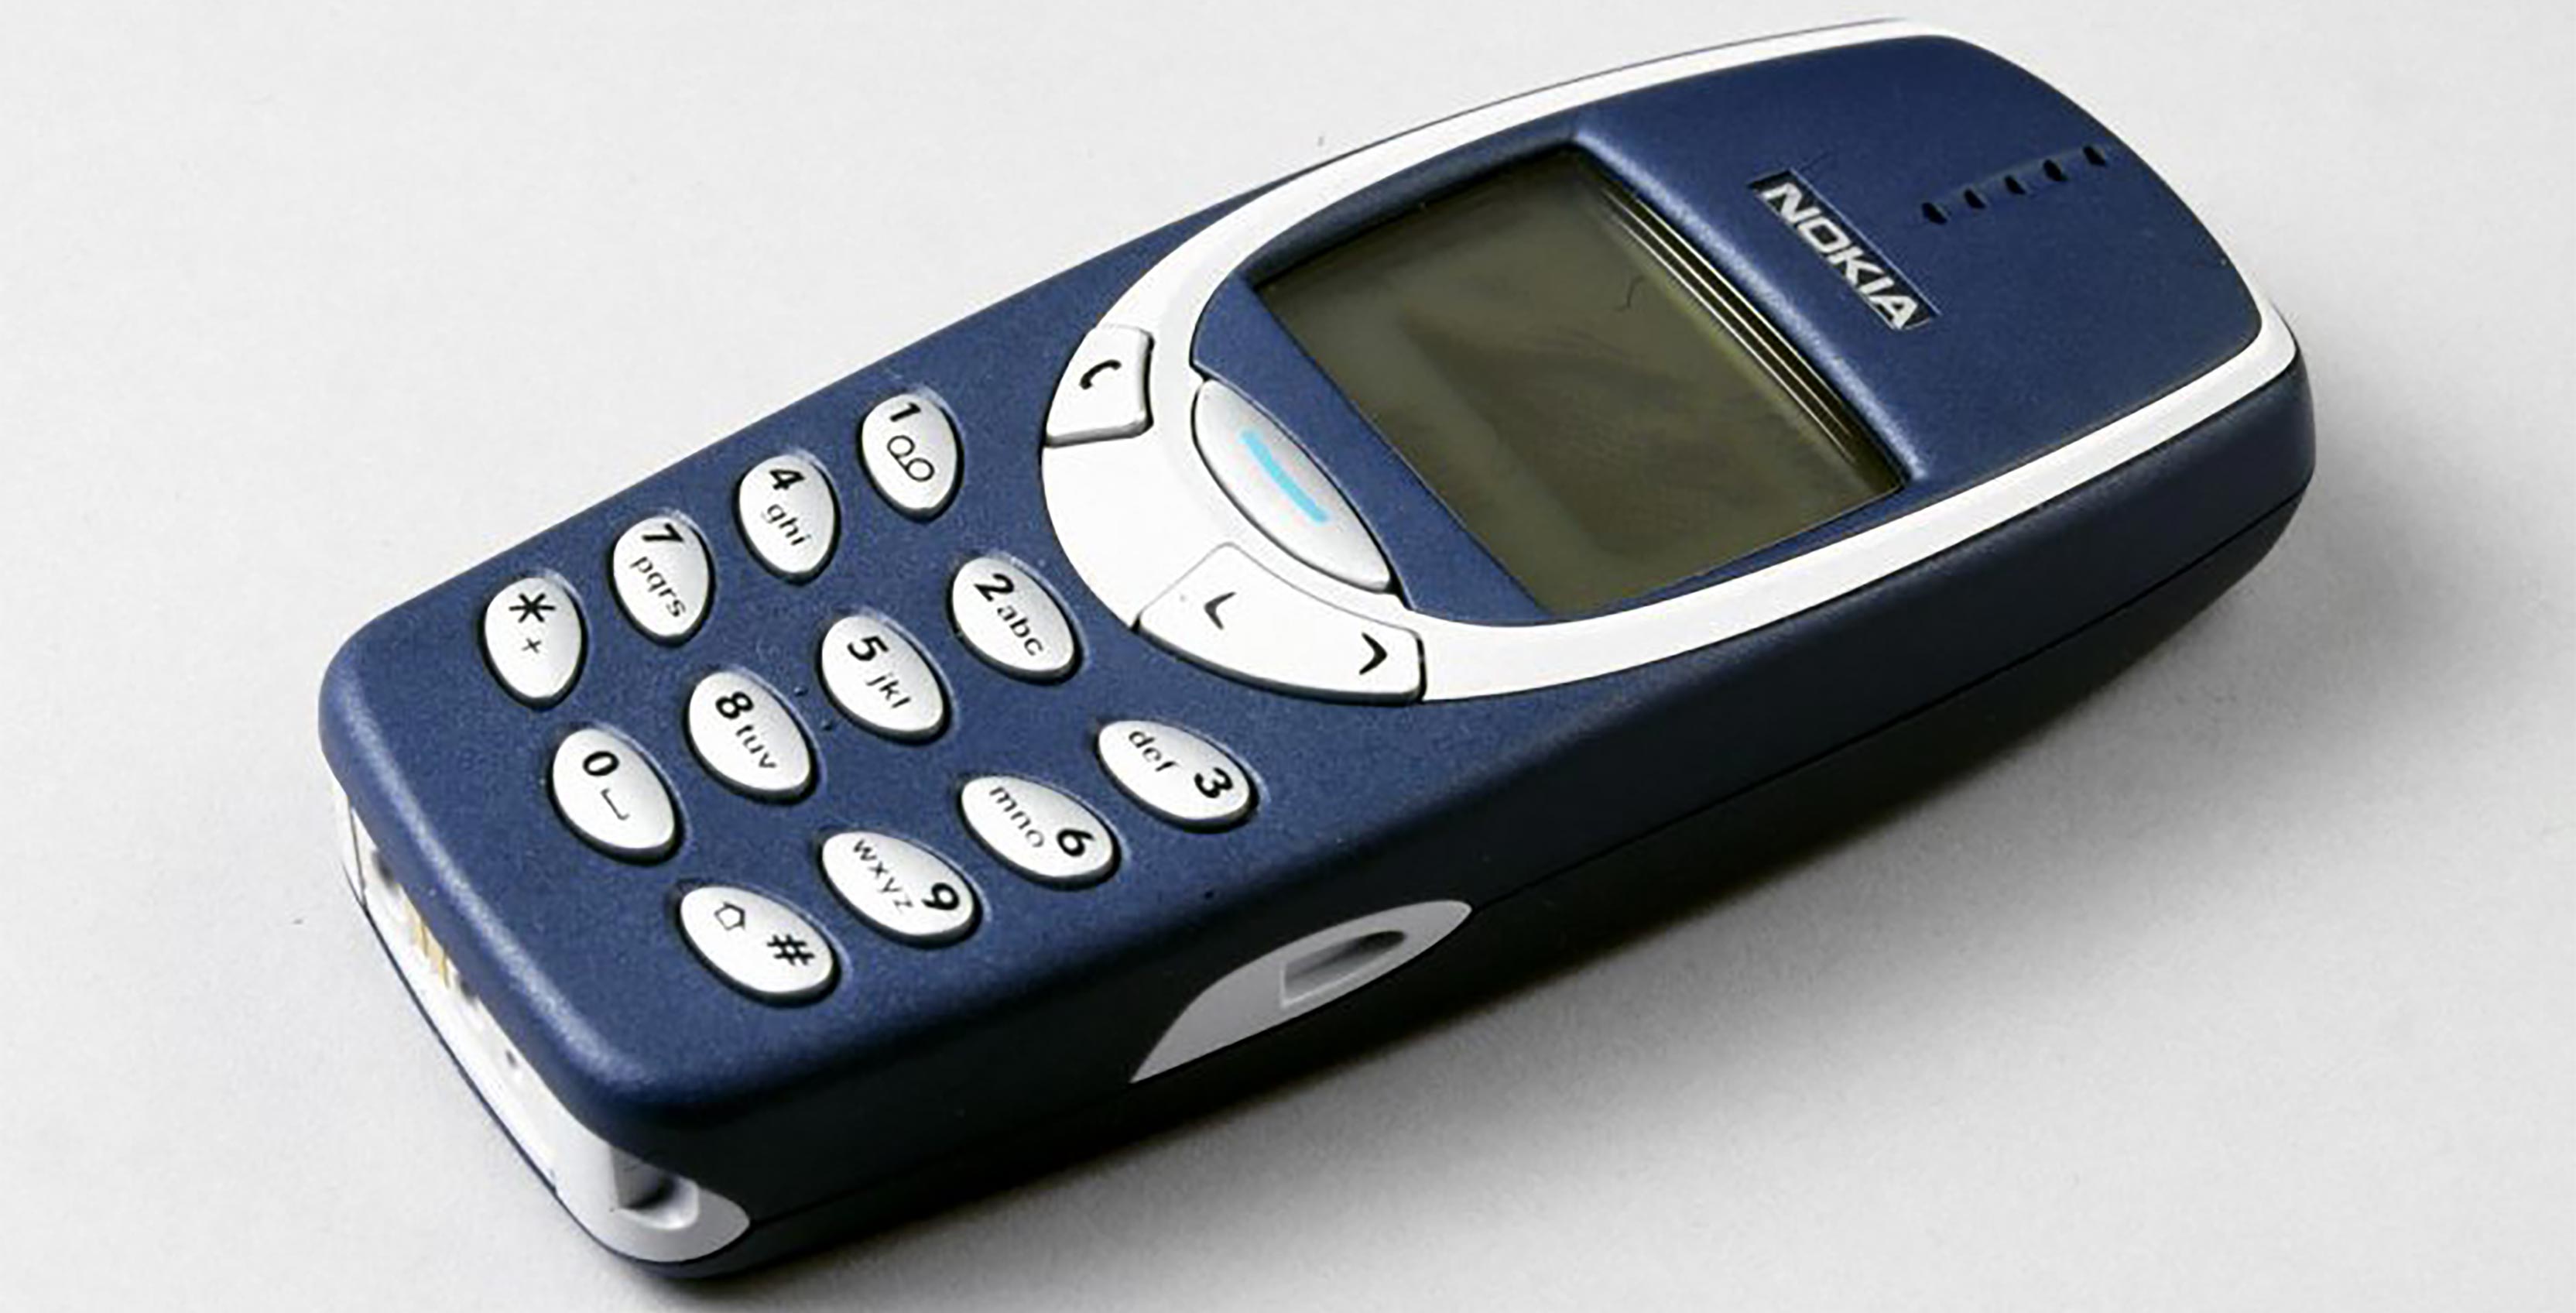 Nokia's 3310 brick phone